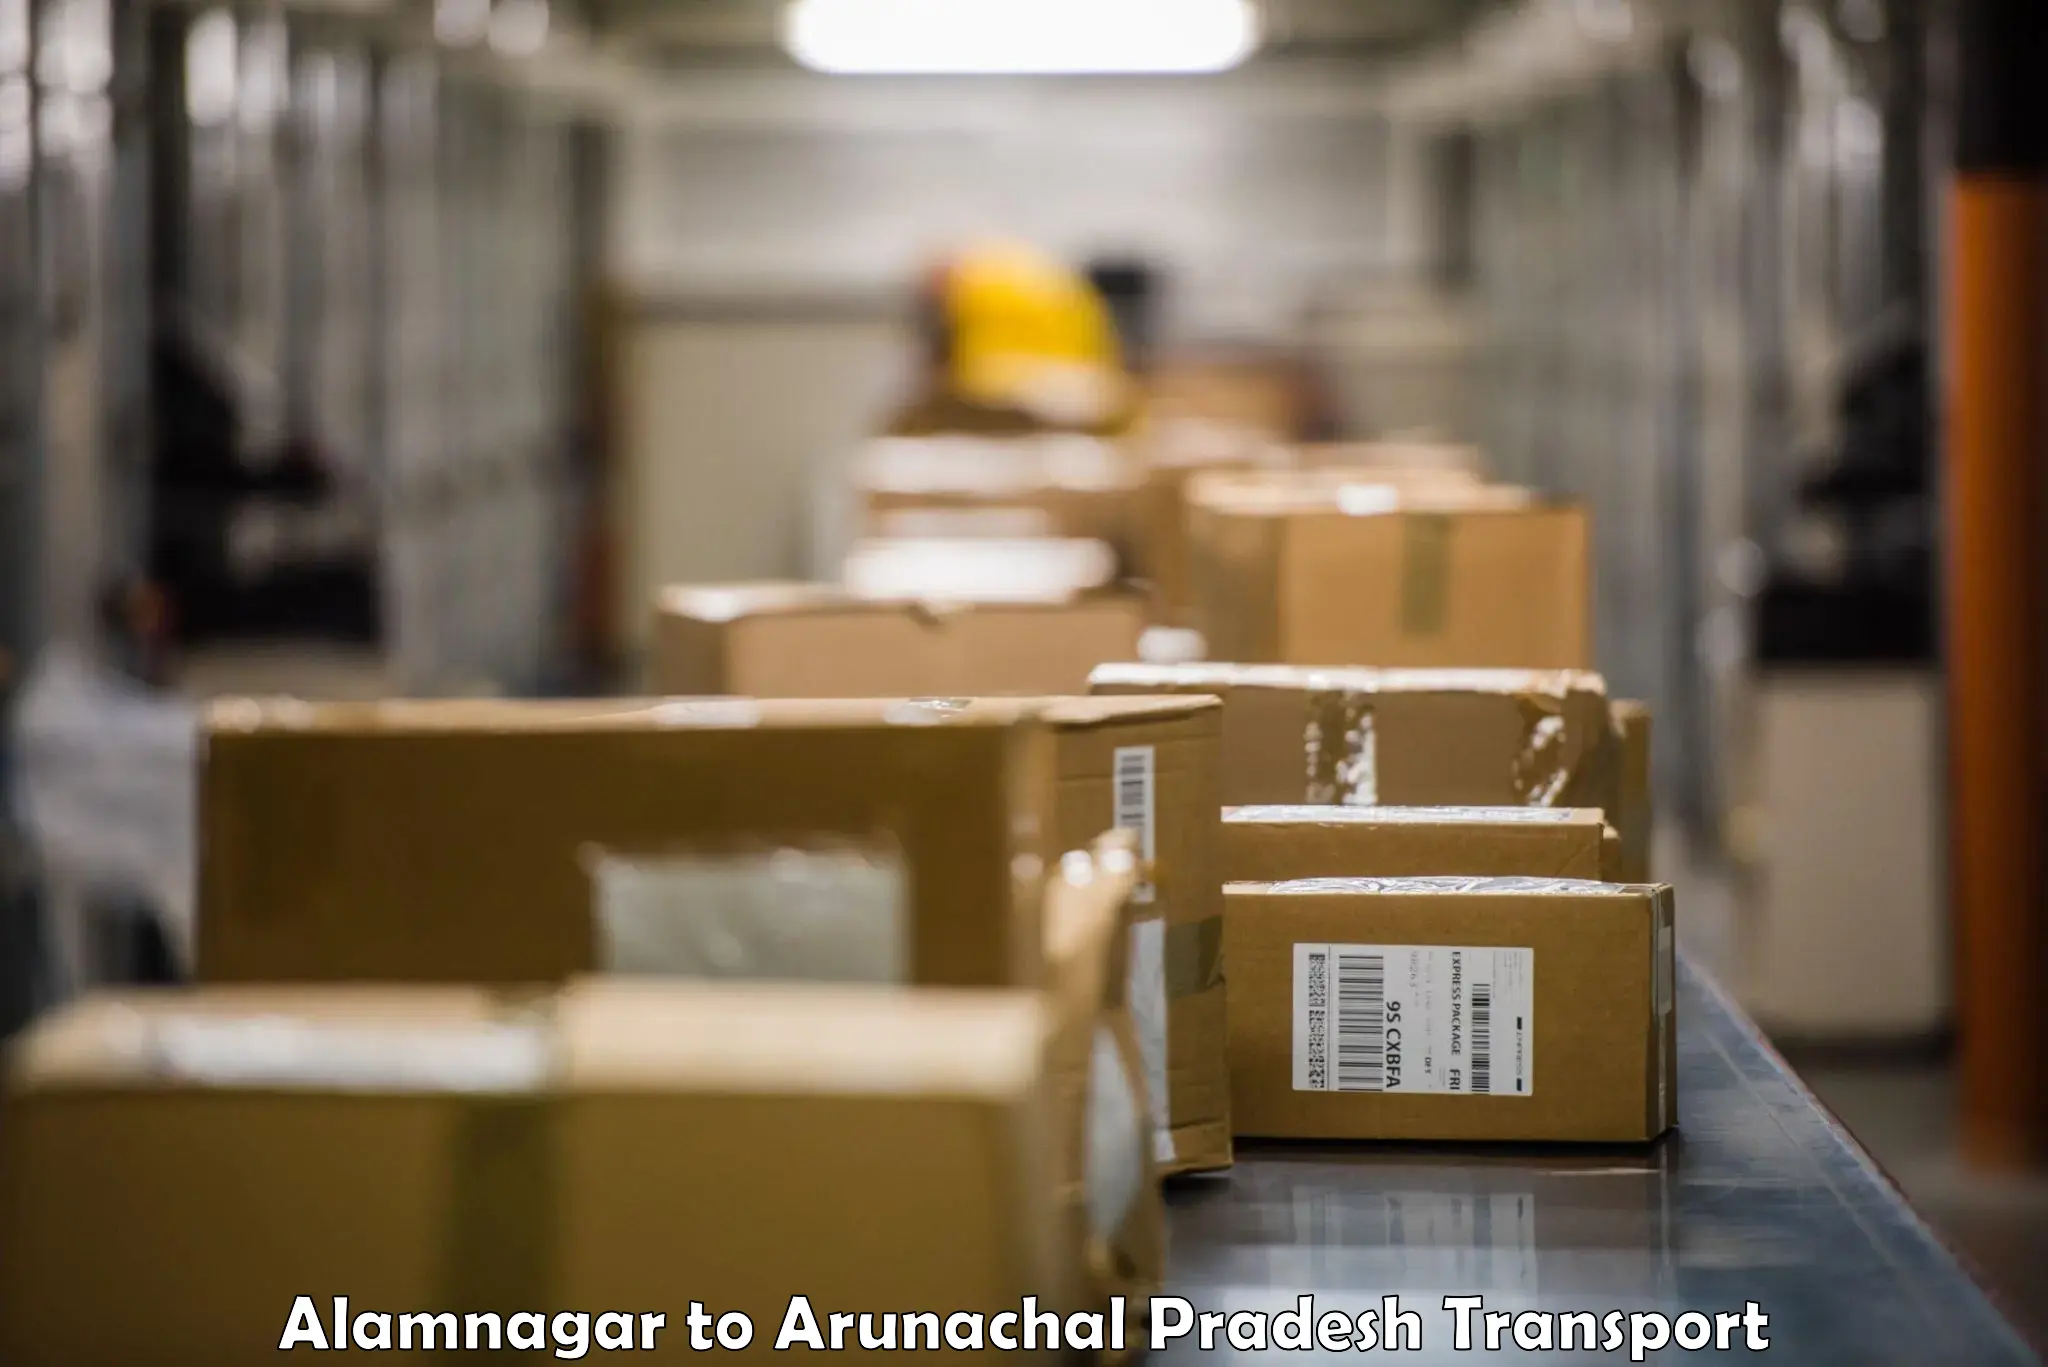 Truck transport companies in India Alamnagar to Arunachal Pradesh